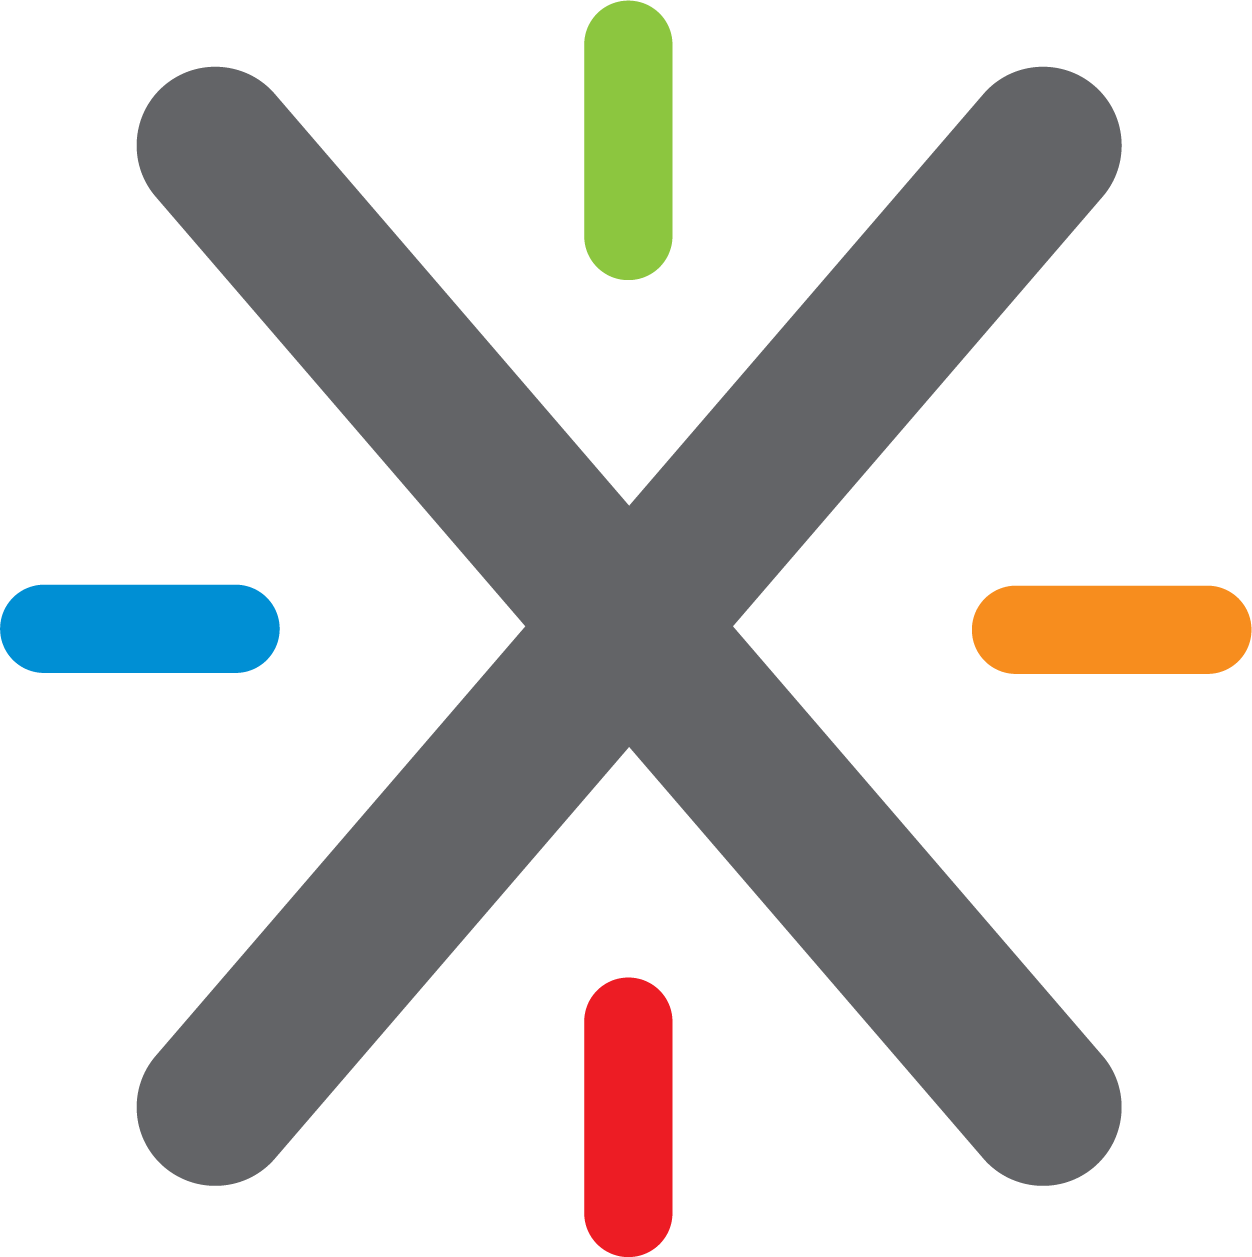 Logo XWiki